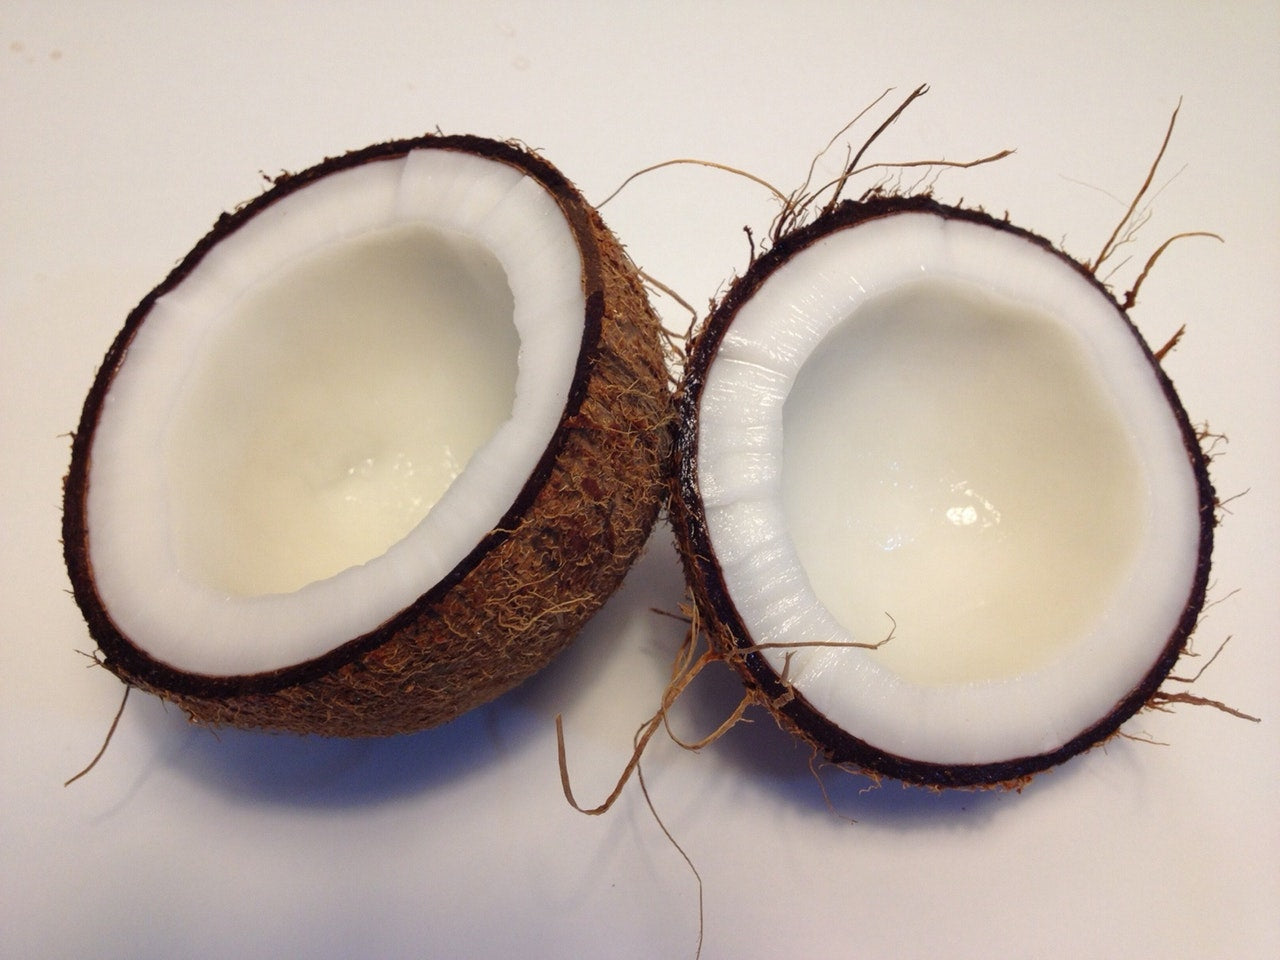 Ingredient Spotlight: Coconut Oil